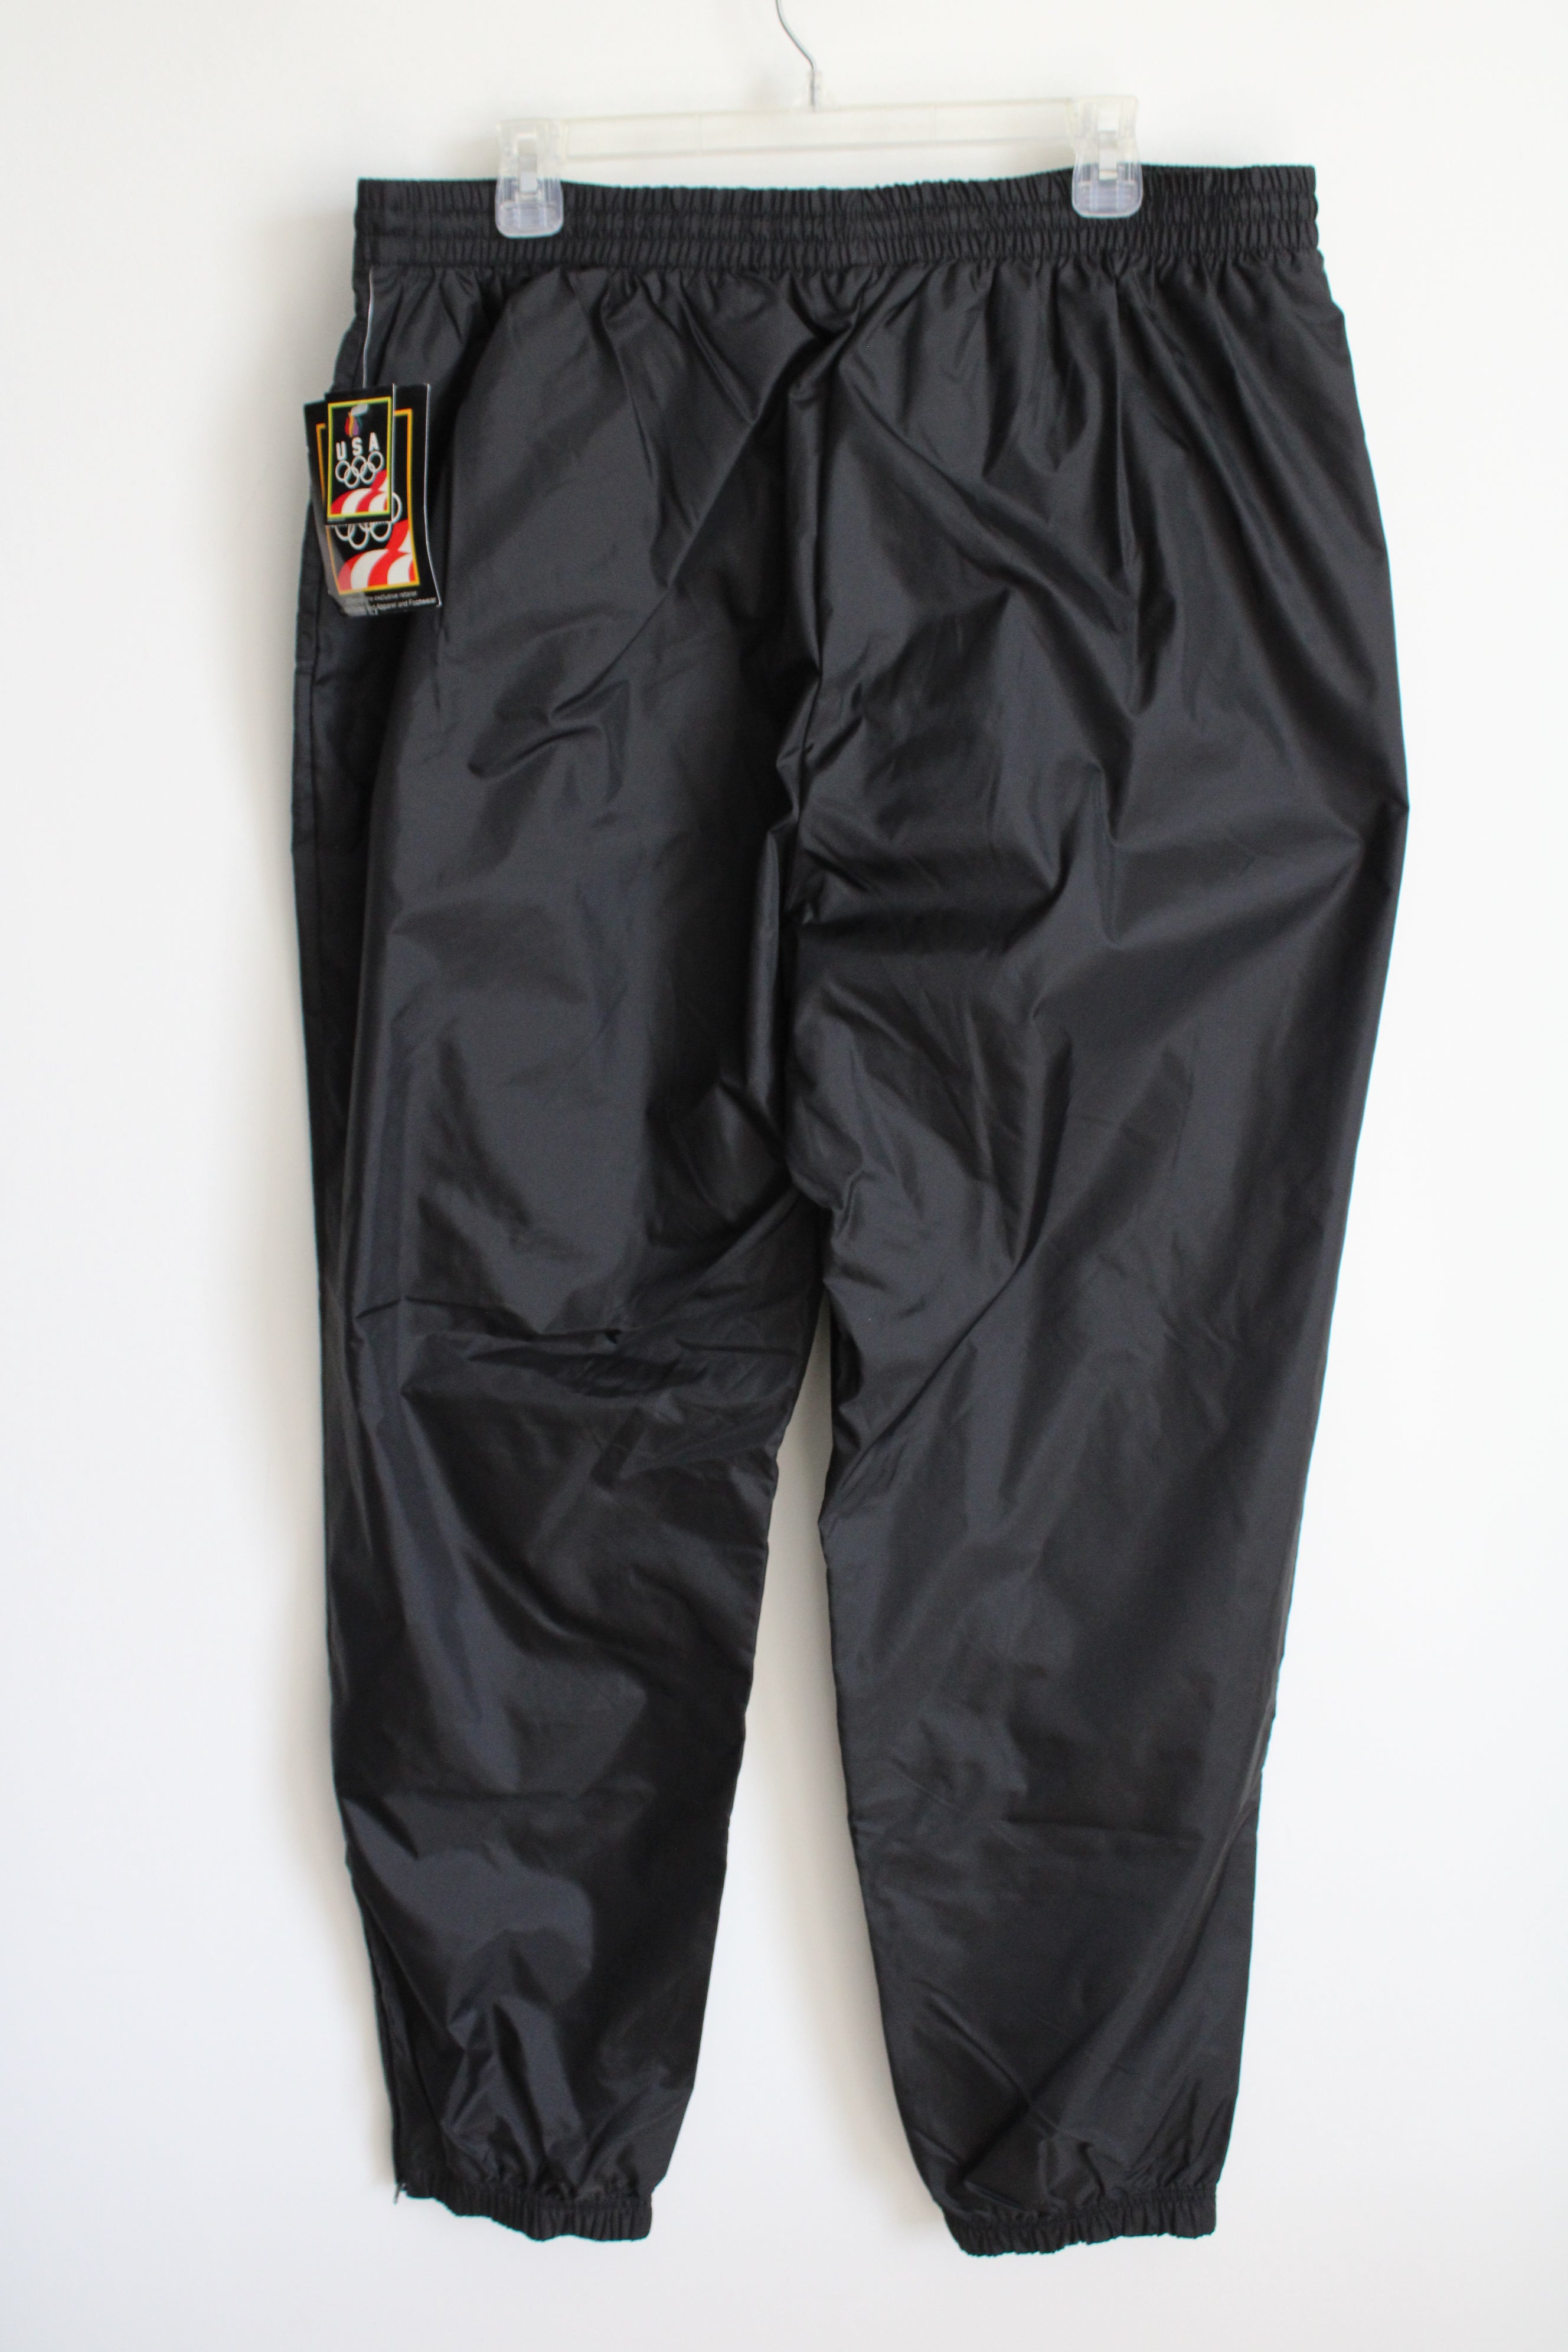 NEW USA Olympics Black Windbreaker Athletic Pants | XL